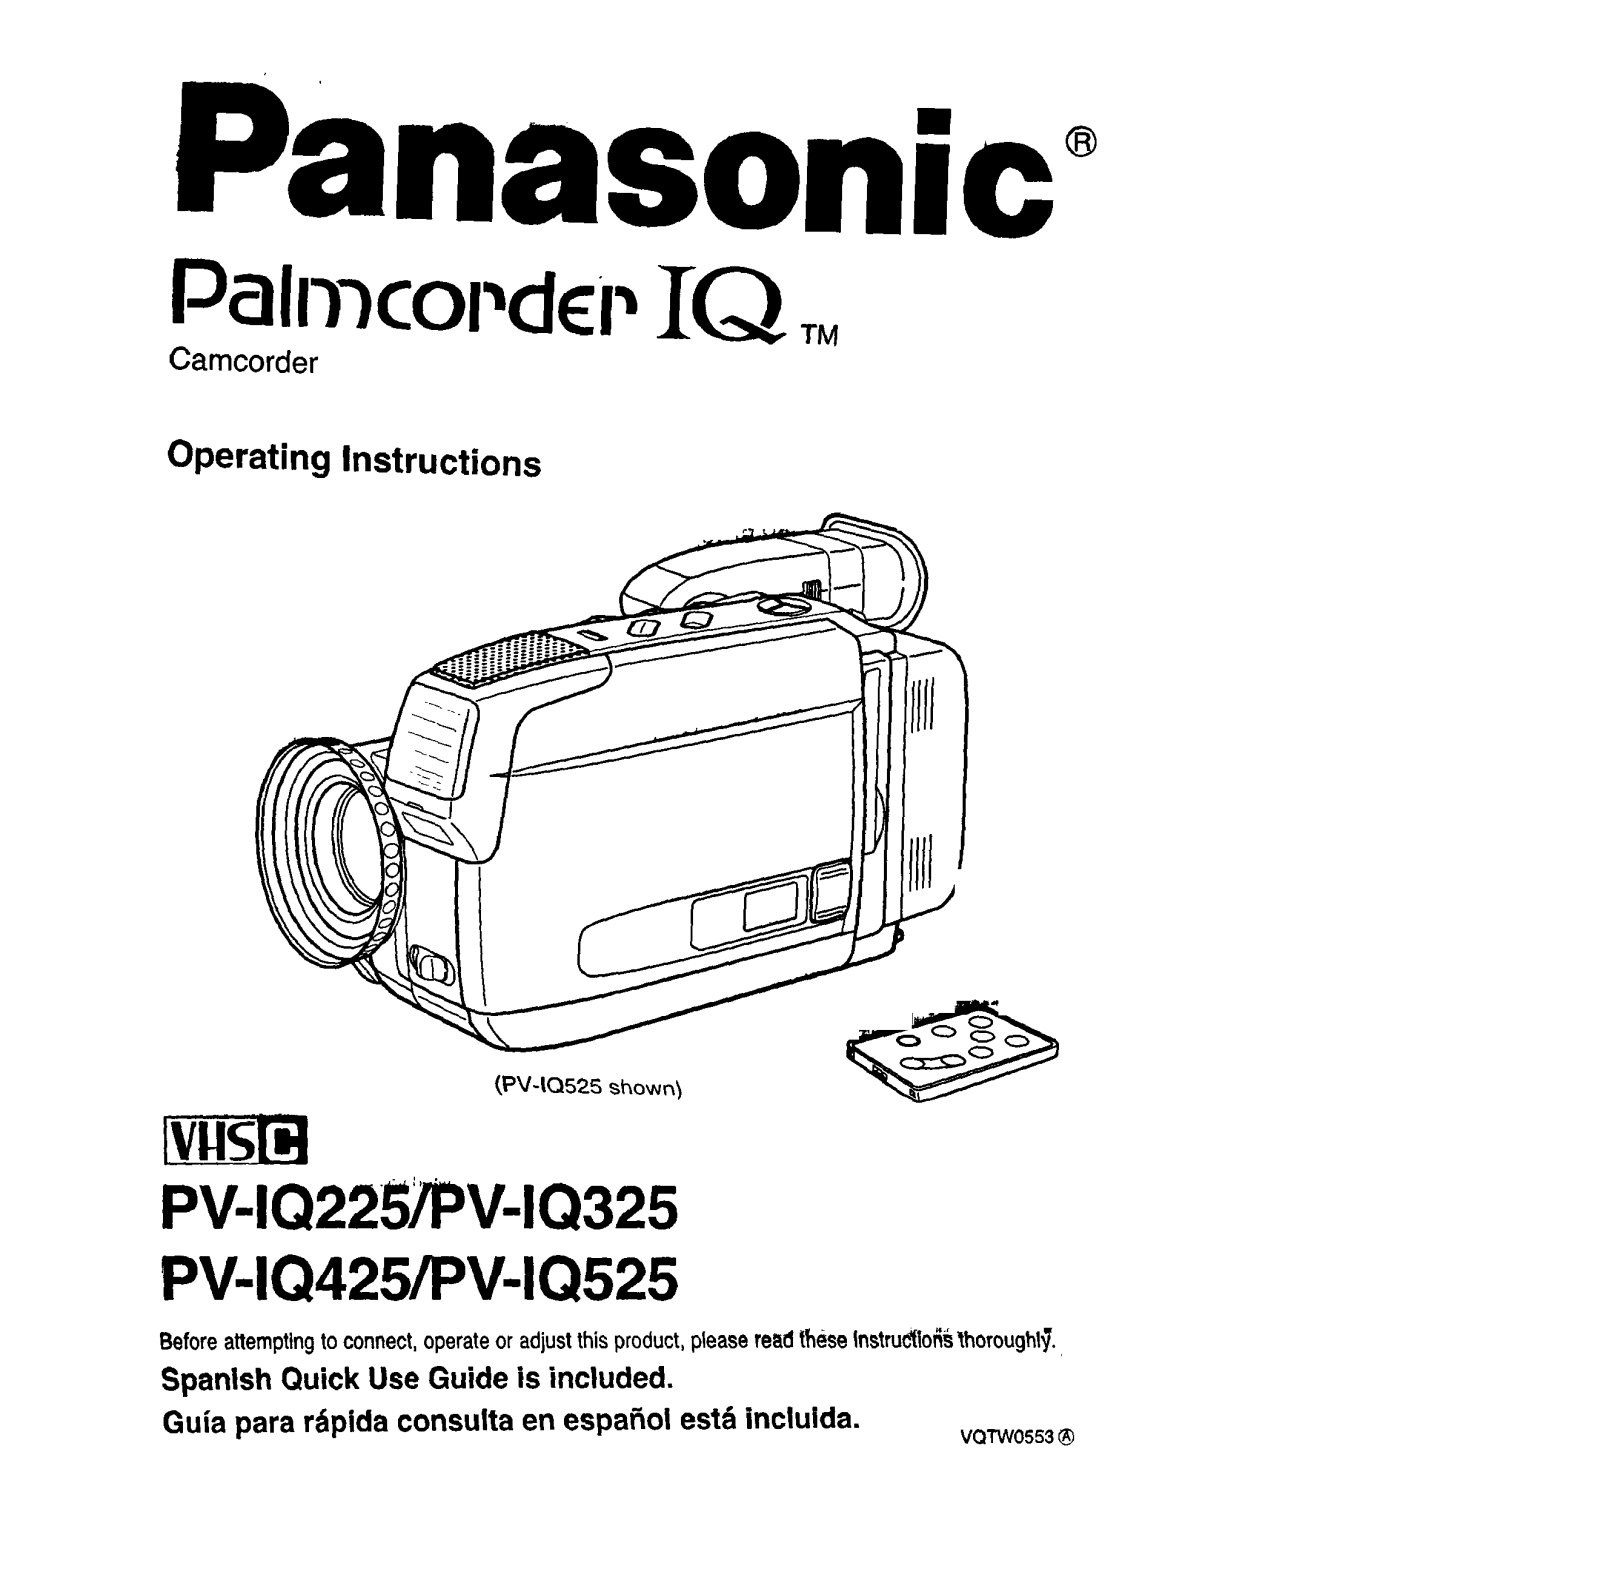 Panasonic PV-IQ525, PV-IQ425, PV-IQ325, PV-IQ225 Owner’s Manual